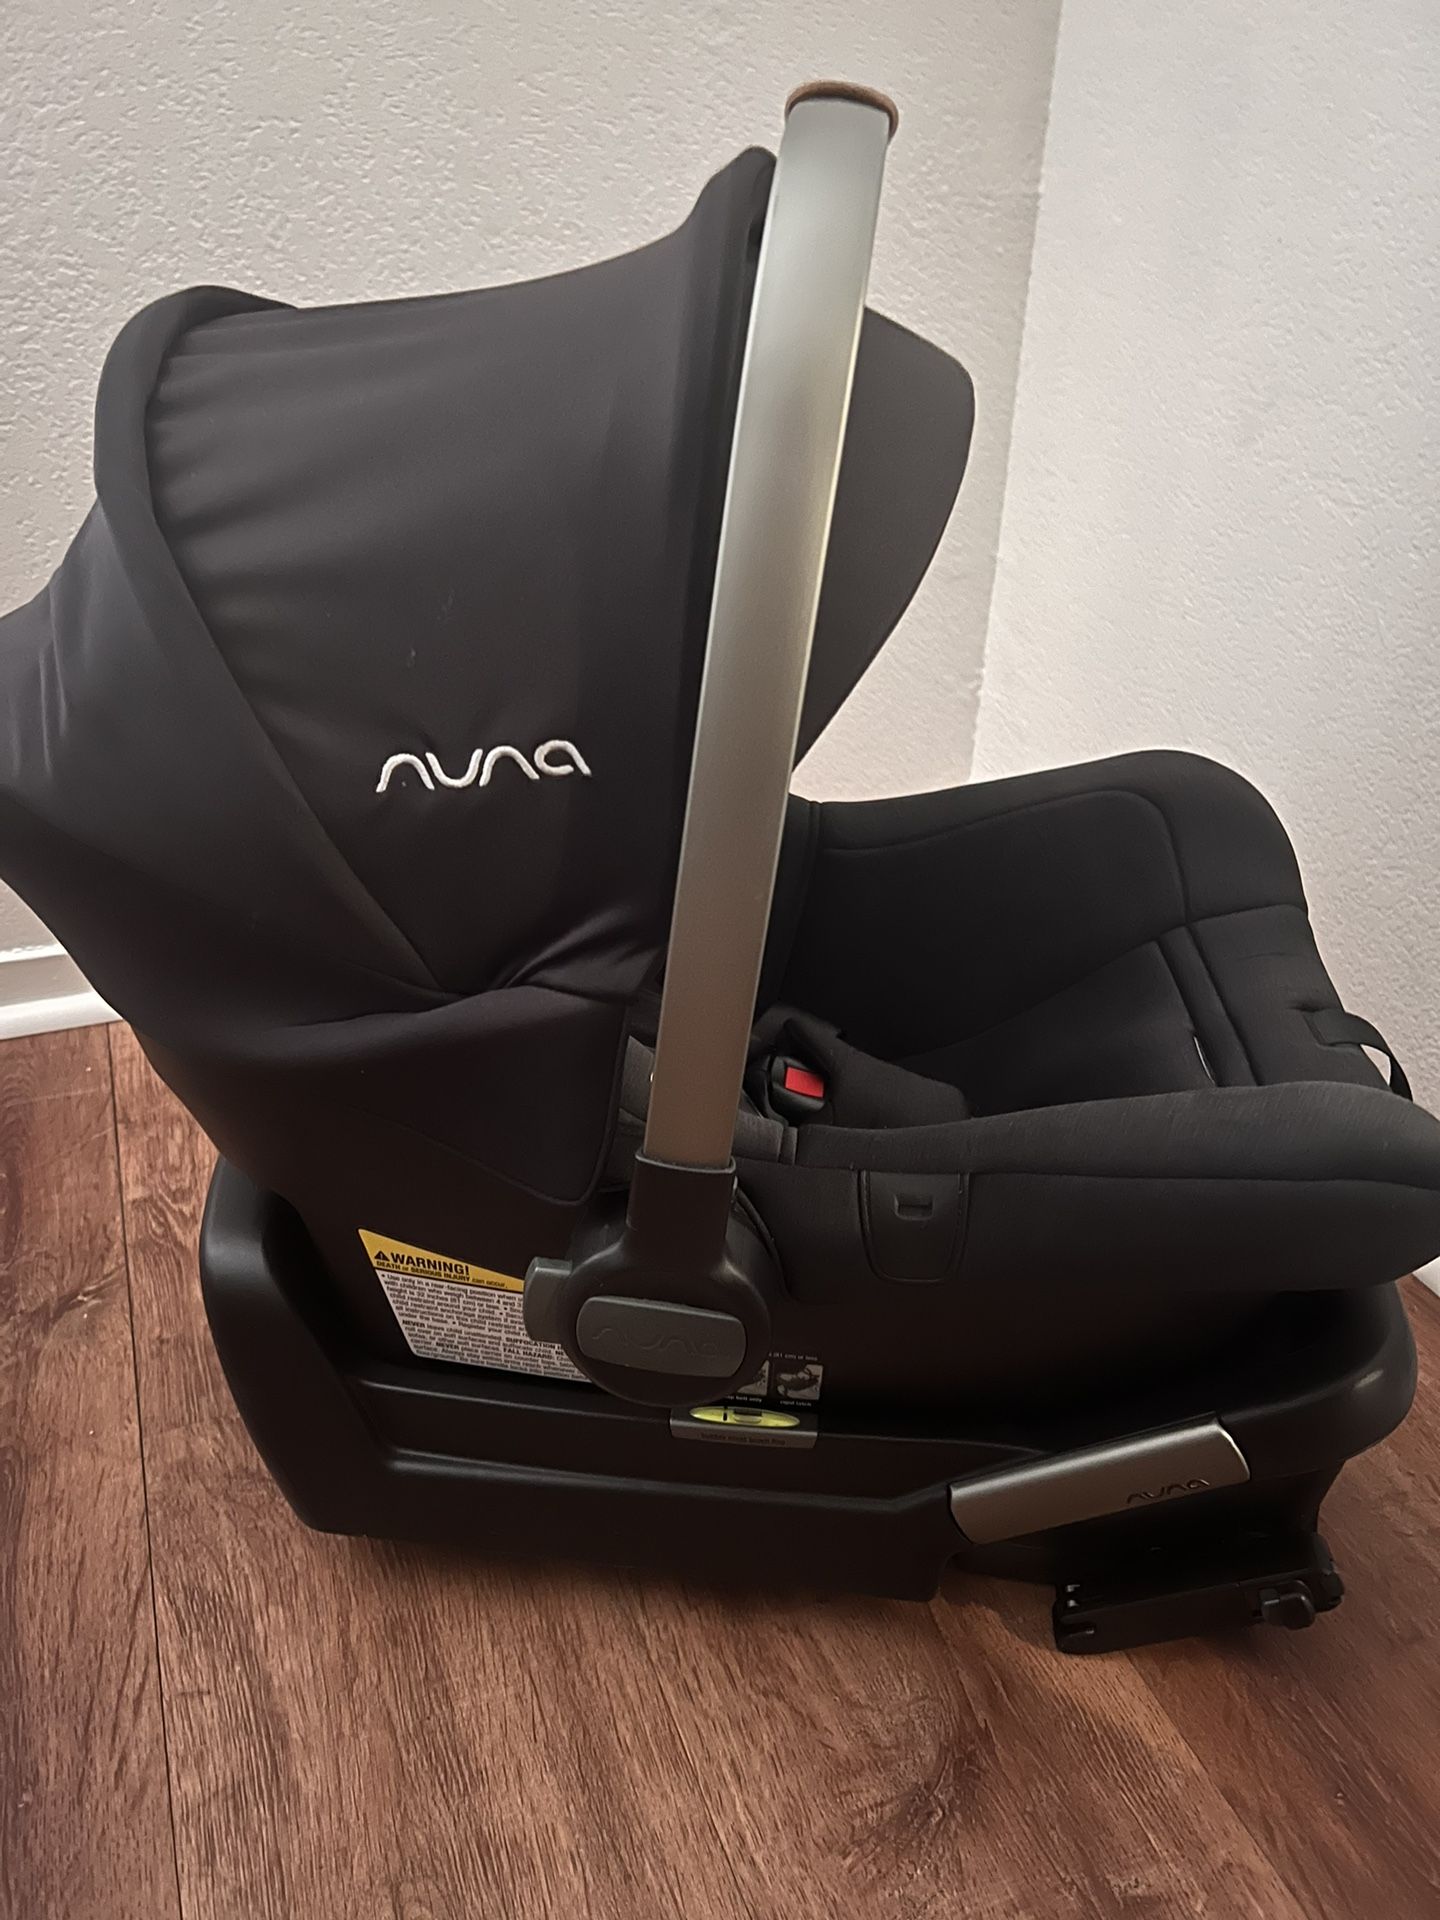 Nina Infant Car seat 